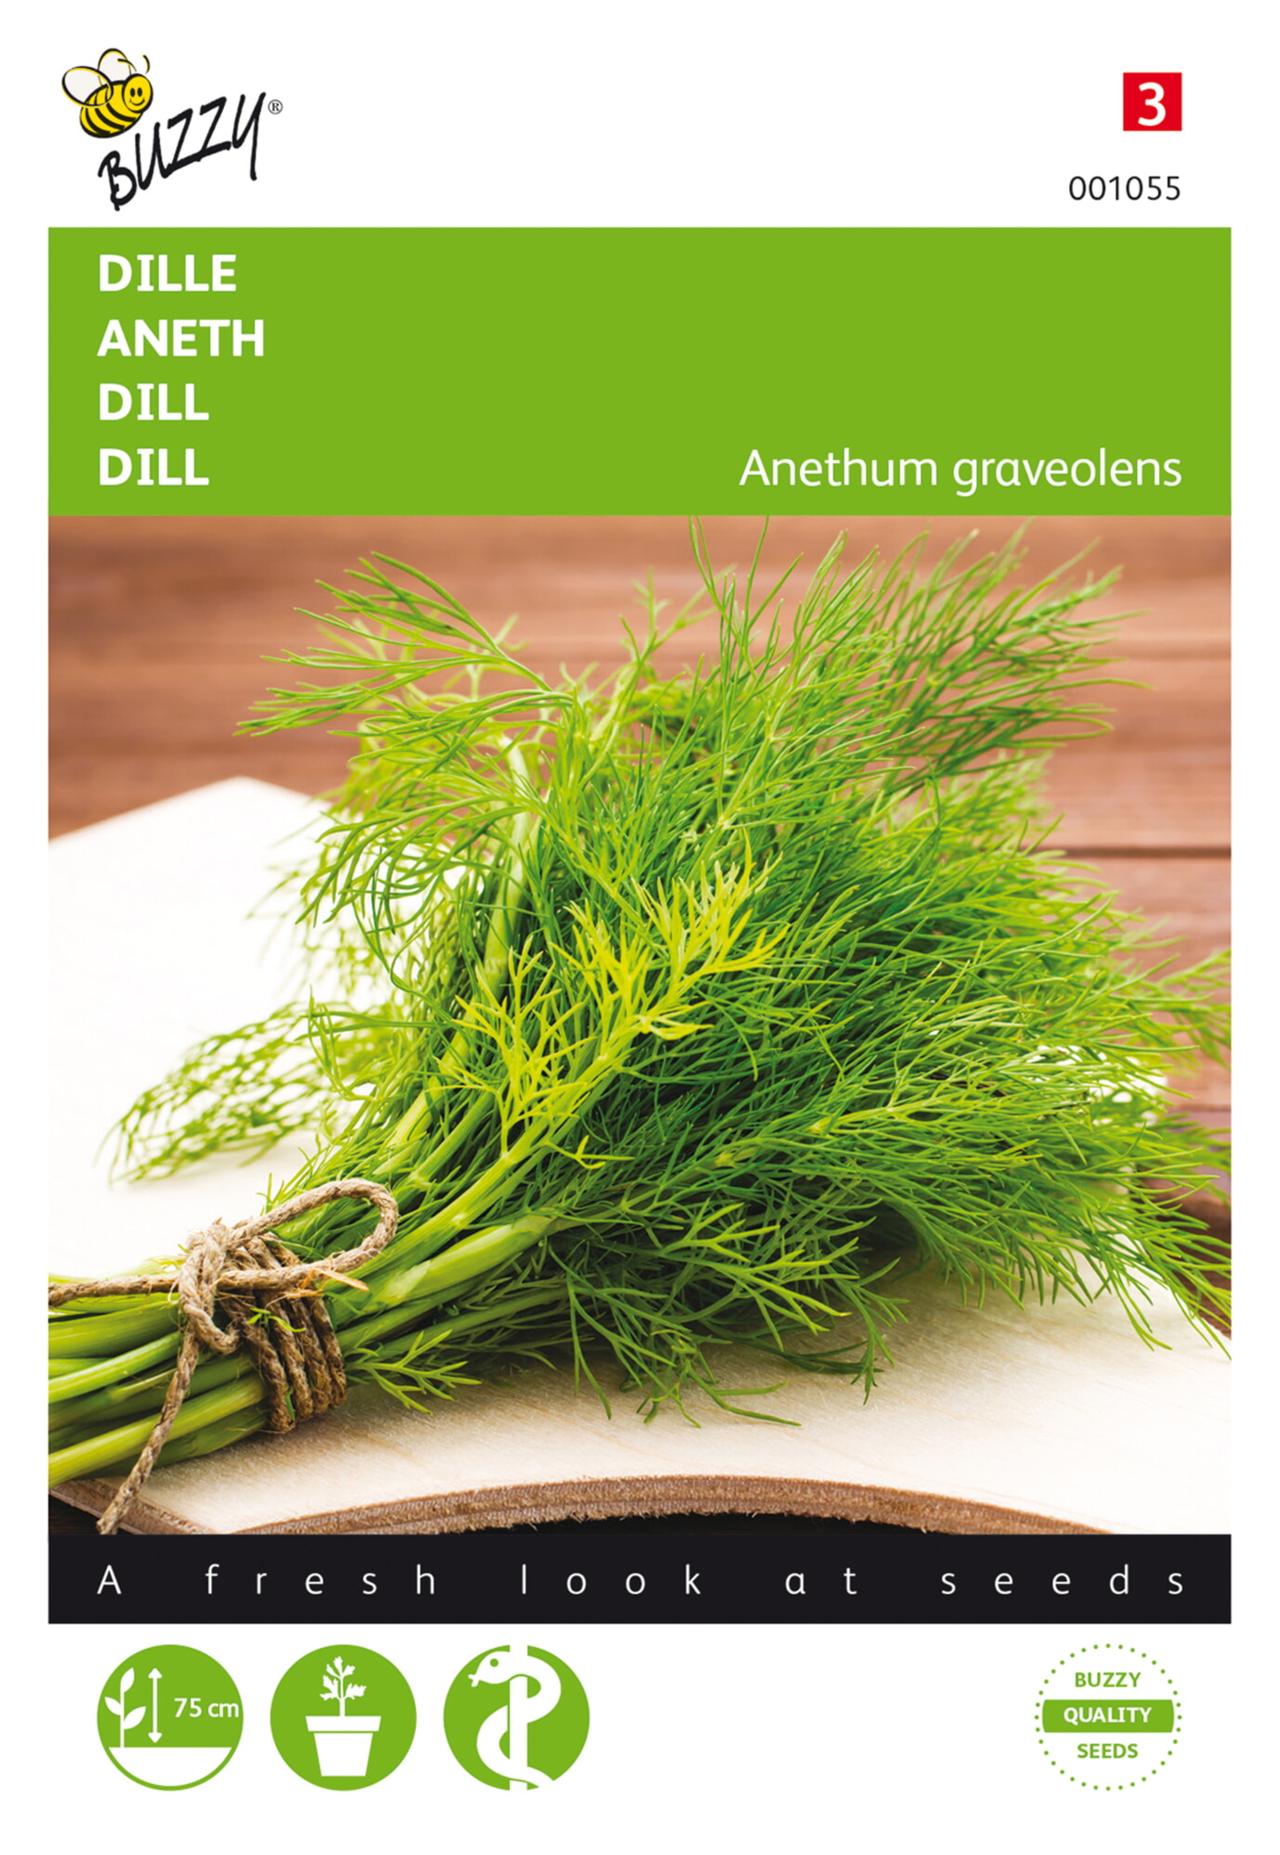 Anethum graveolens plant